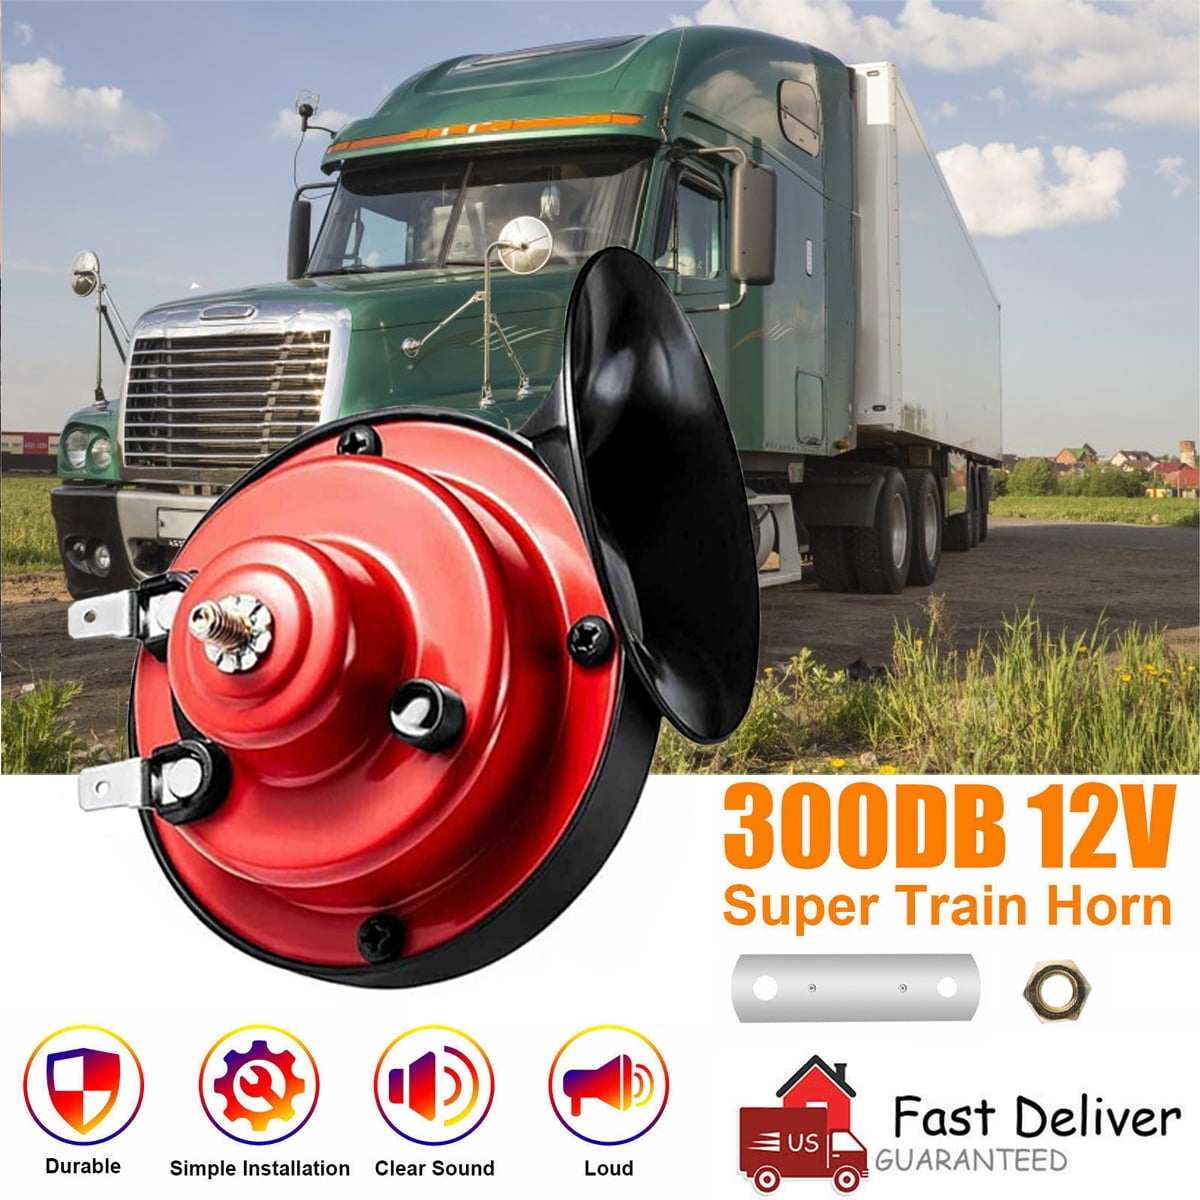 Super Train Horn 12v Super Train Horn For Trucks Suv Car Boat Electric Horn  Motorcycles Loud Train Horn